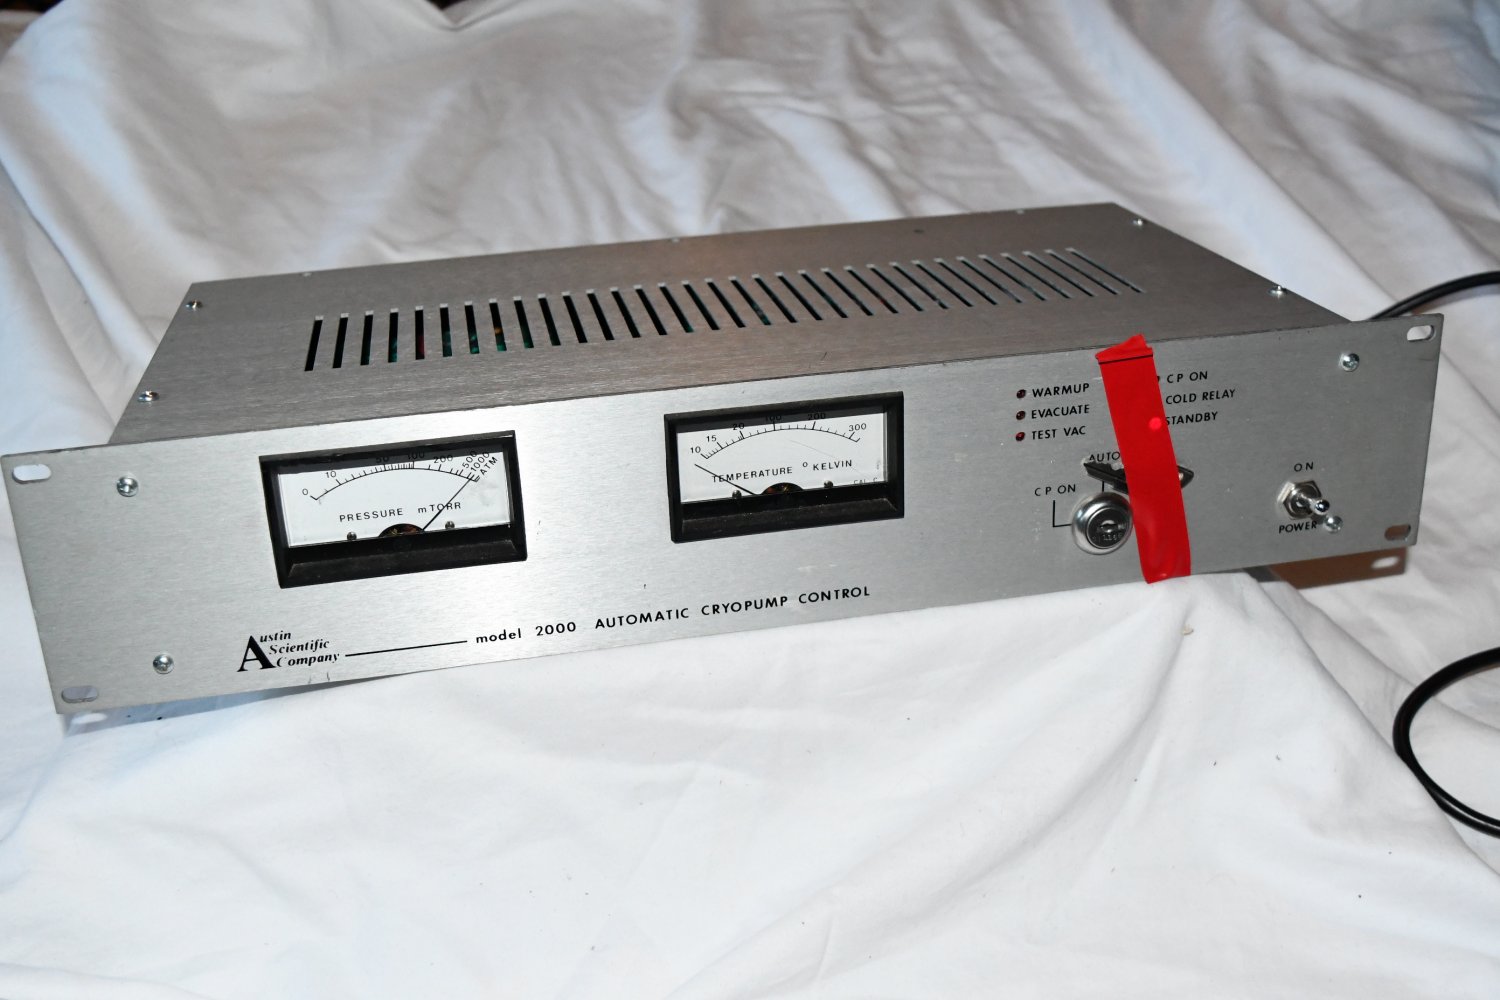 Austin Scientific Company Automatic Cryopump Control Model 2000 515c3 2/22